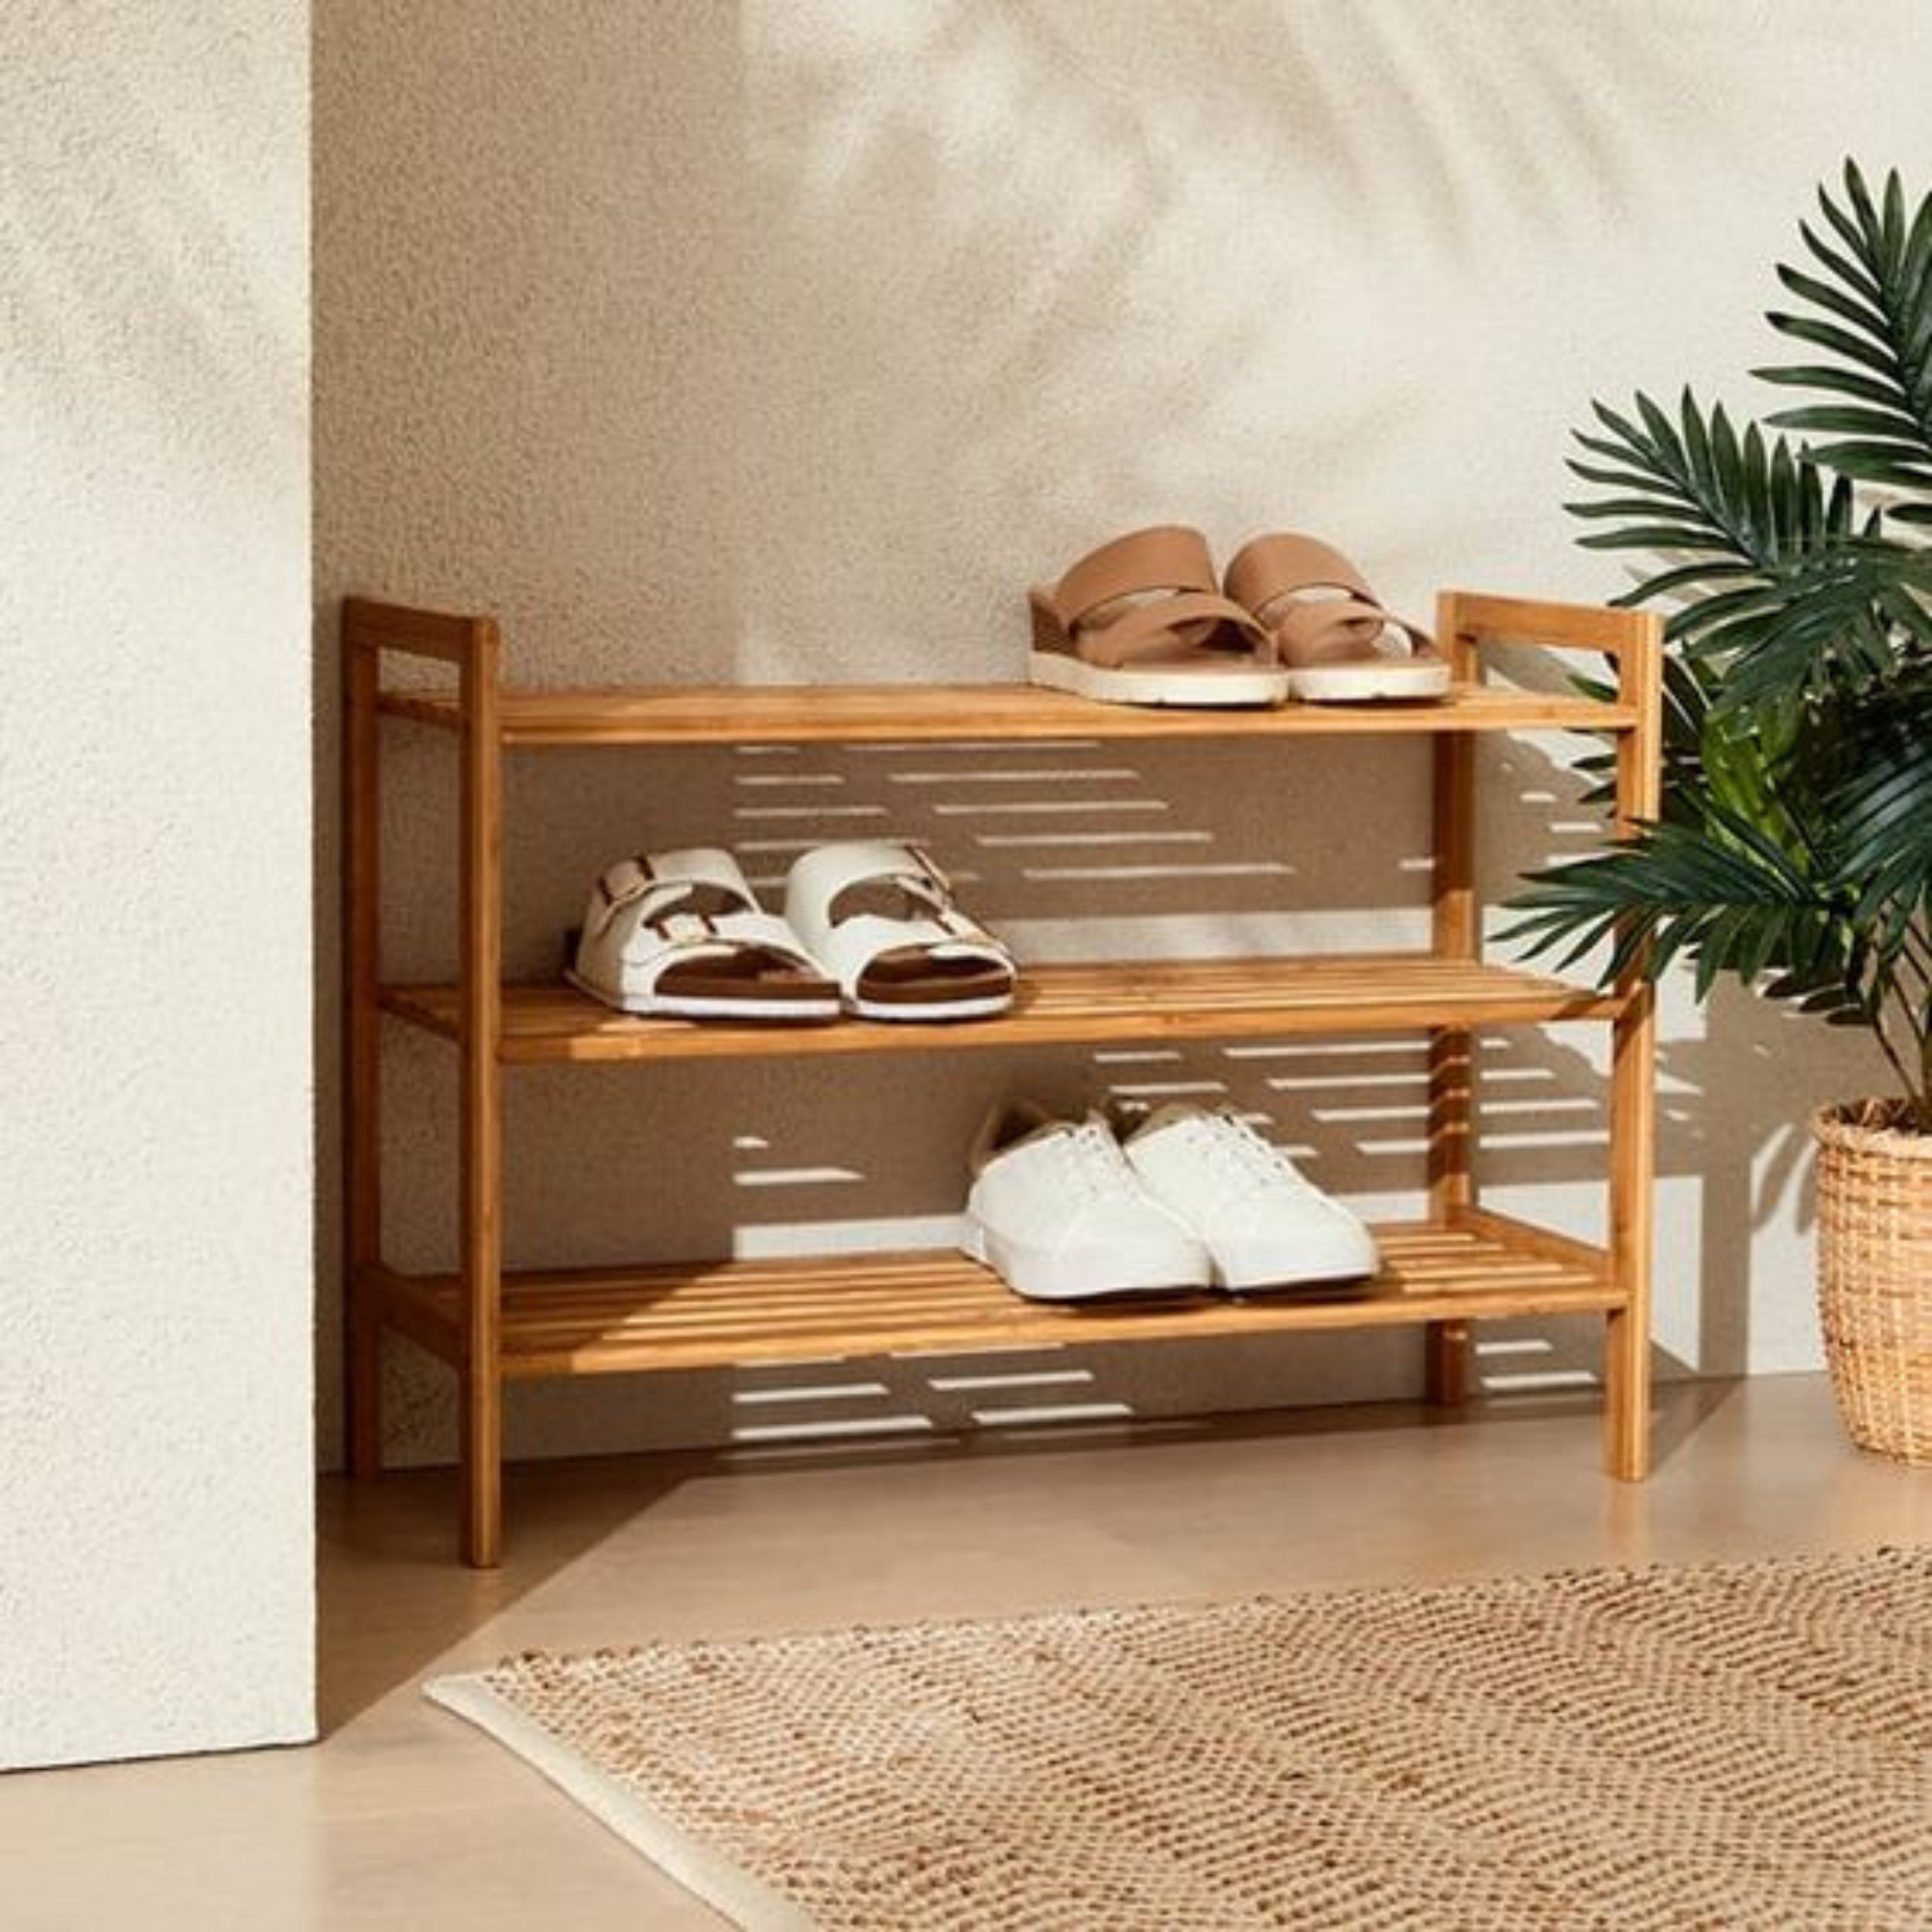 Shoe Storage - Bed Bath & Beyond